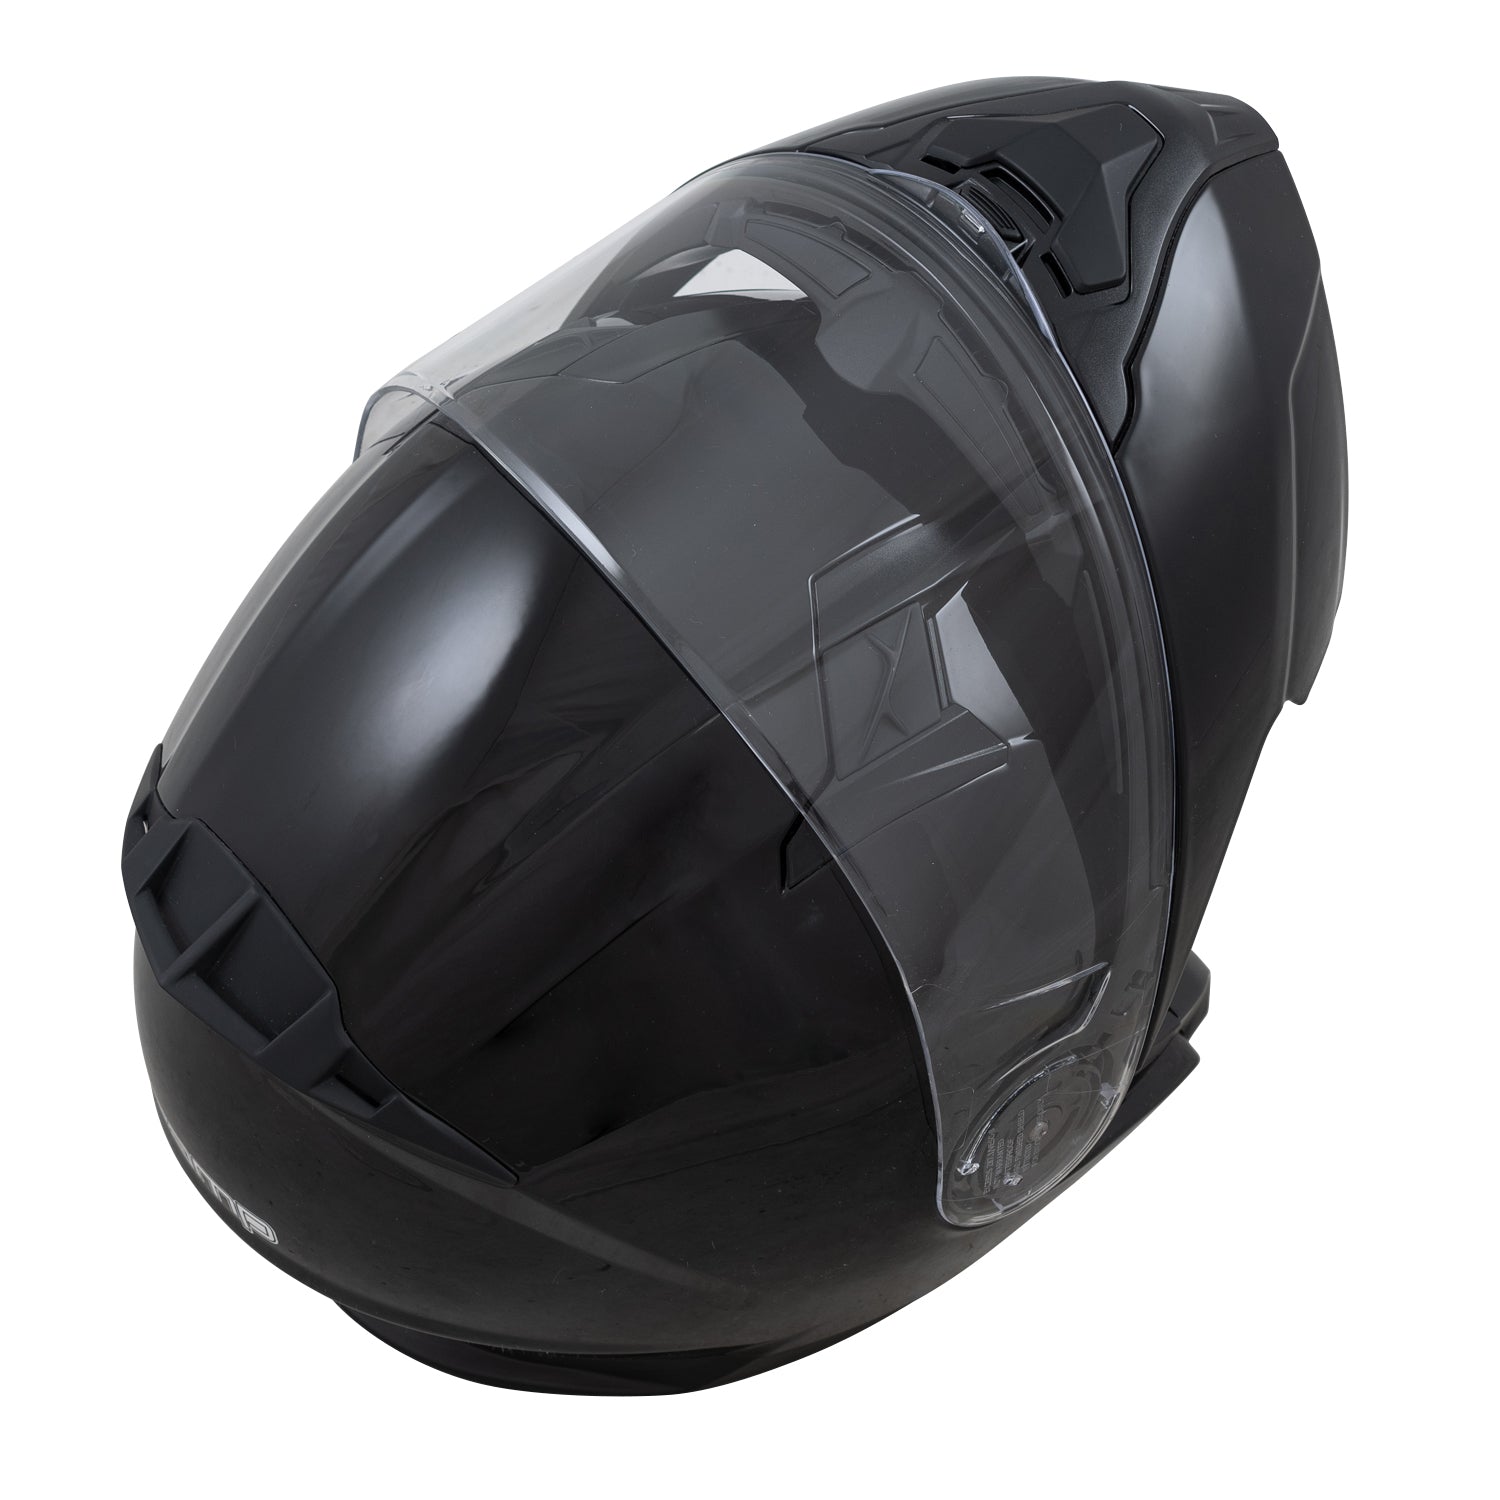 Zamp FL-4 Solid Helmet, ECE22.05 & DOT